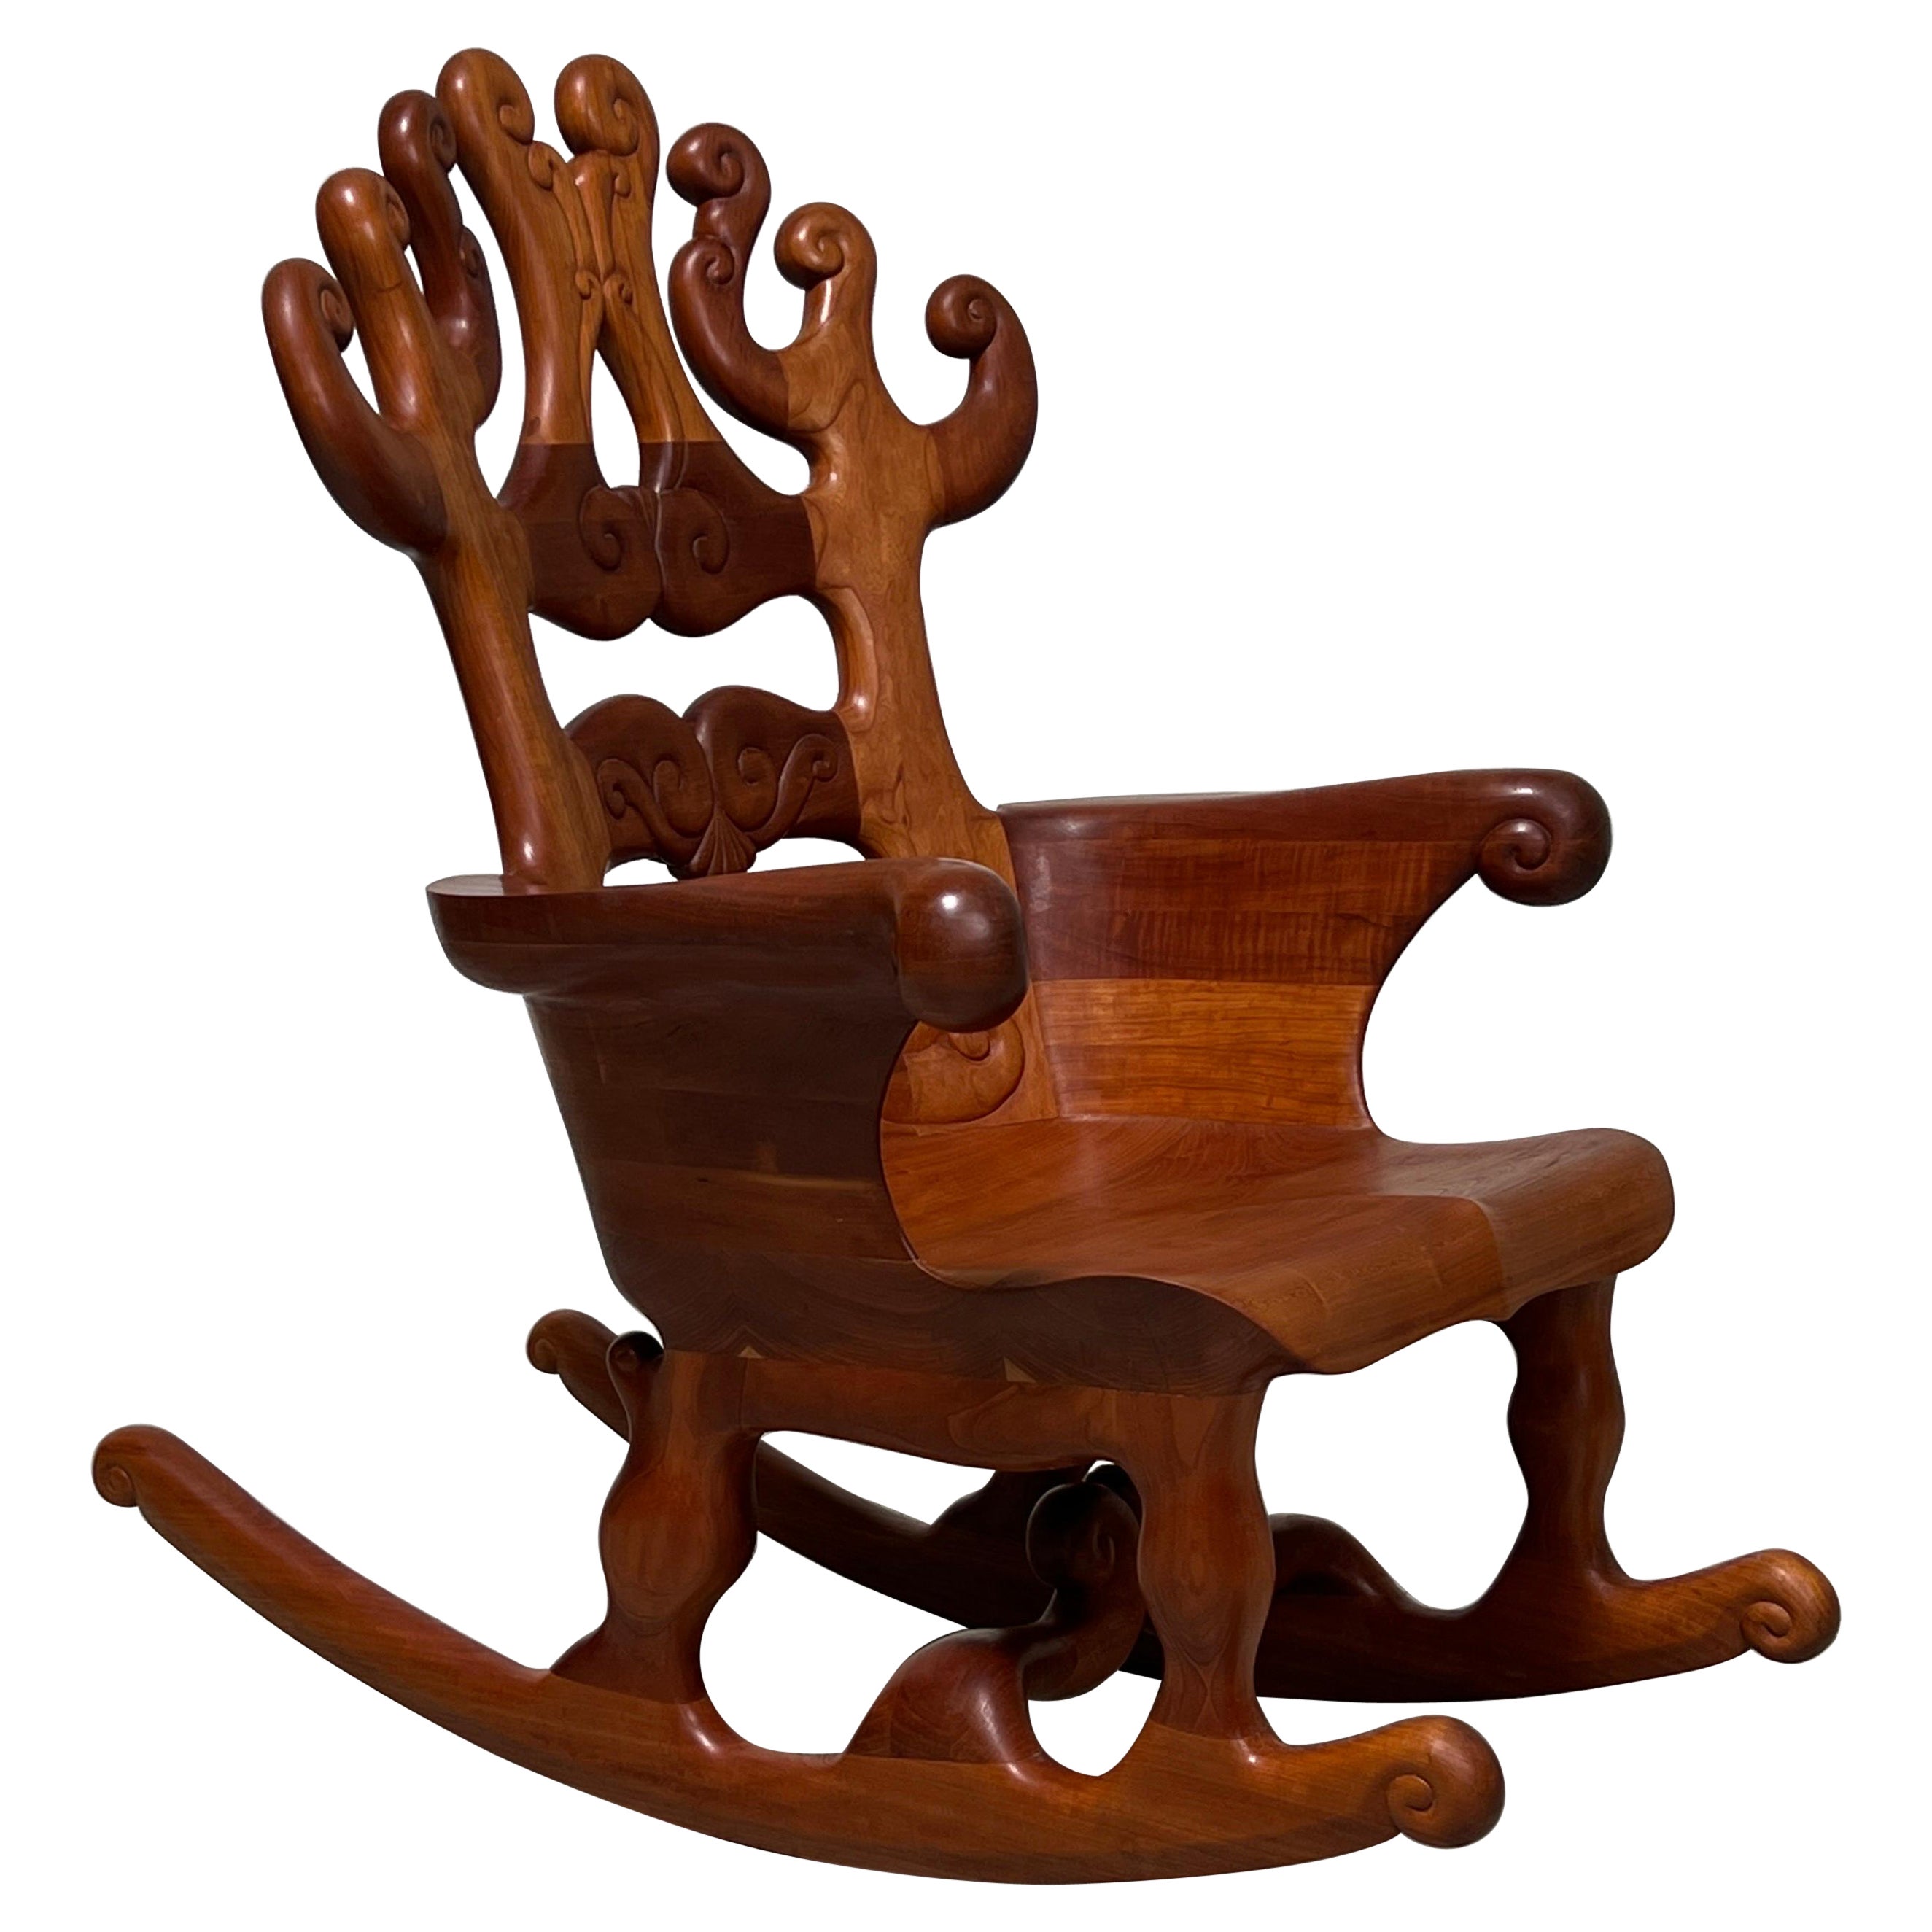 Studio Craft Rocking Chair by John Bauer